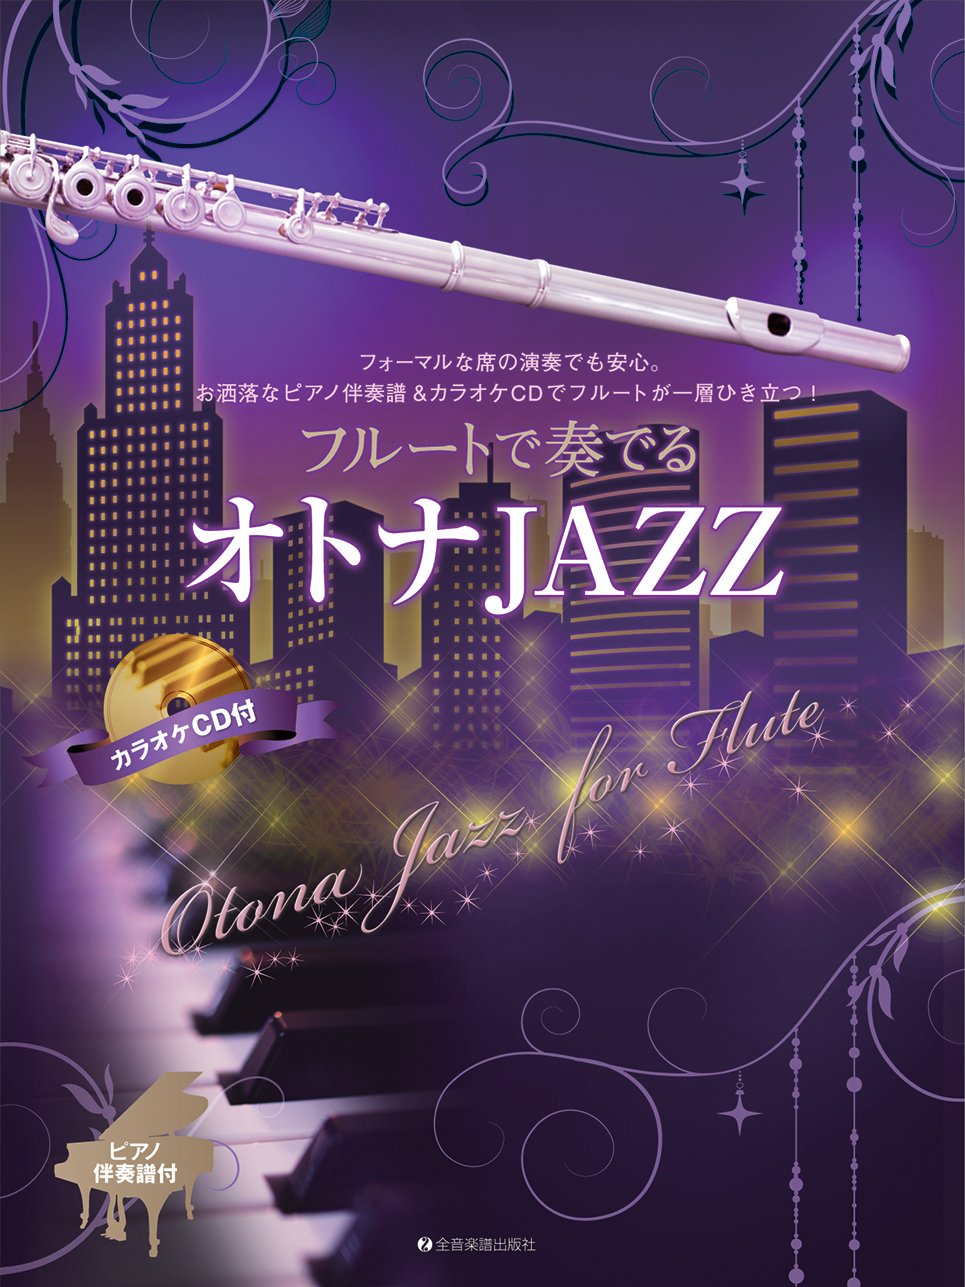 Otona Jazz for Flute with Piano accompaniment w/CD(Piano Accompaniment Tracks)